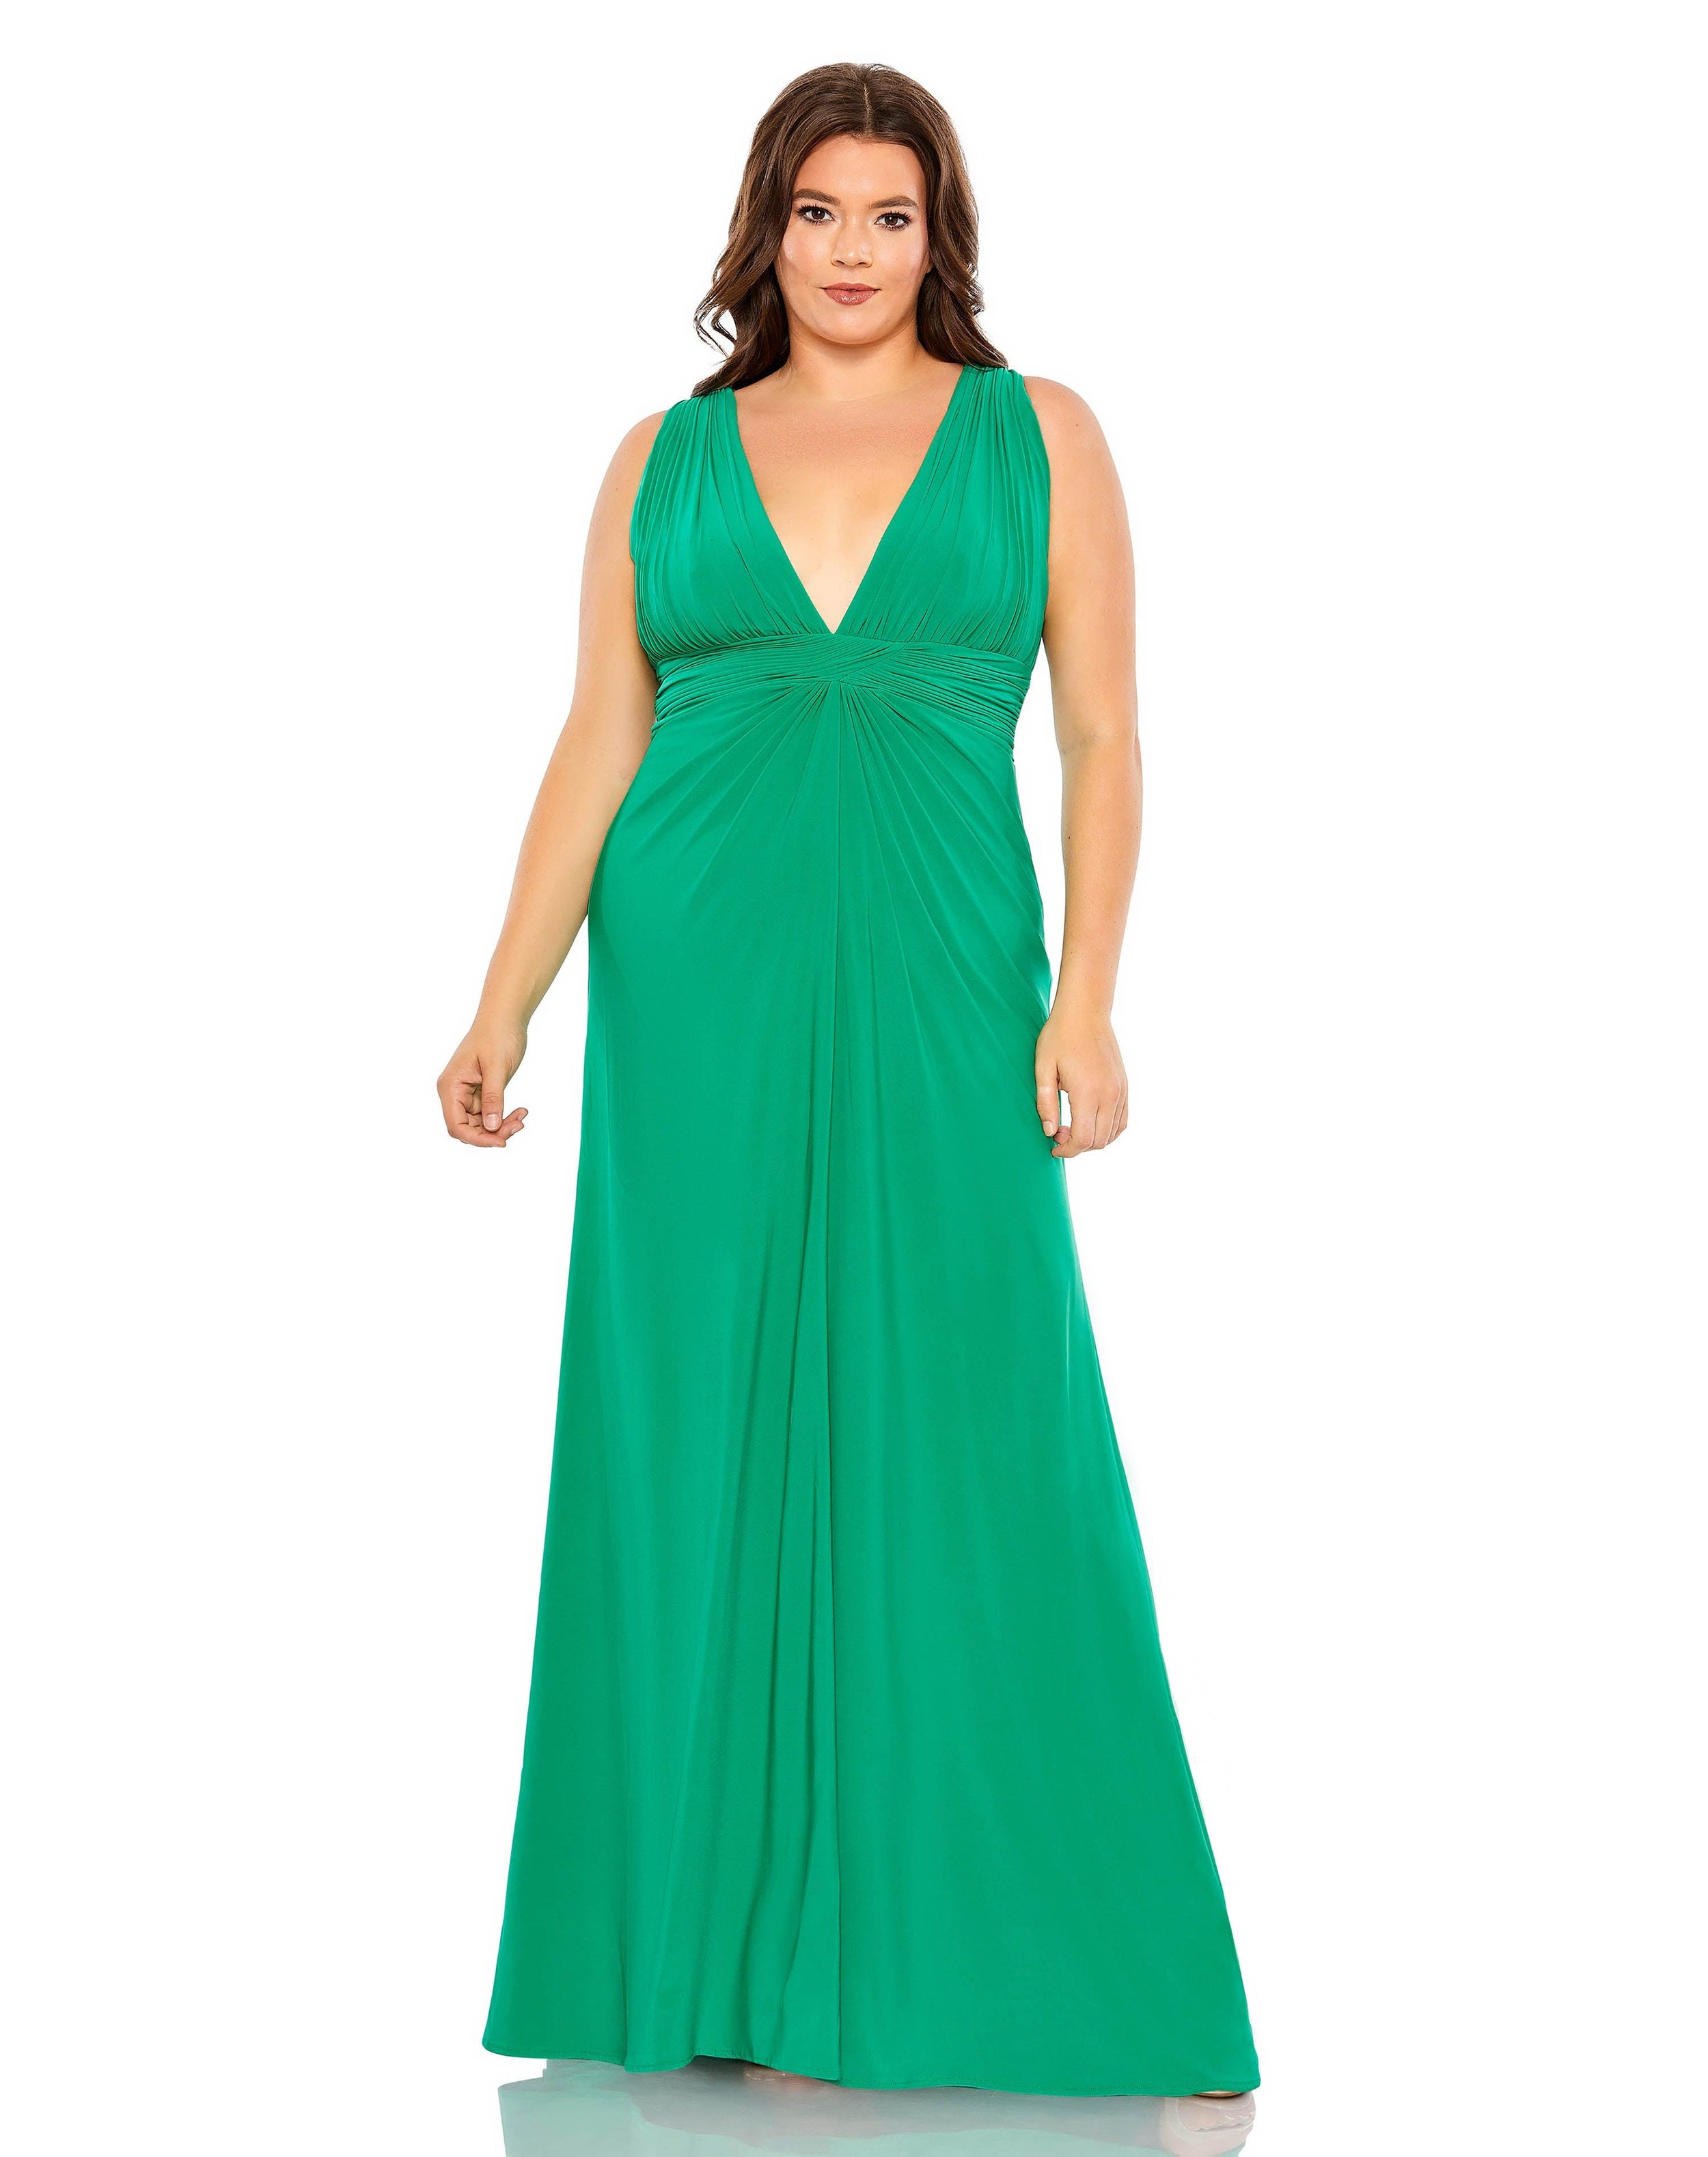 Plus Size Dresses Fabulouss Long Sleeveless Plus Size Formal Dress Jade